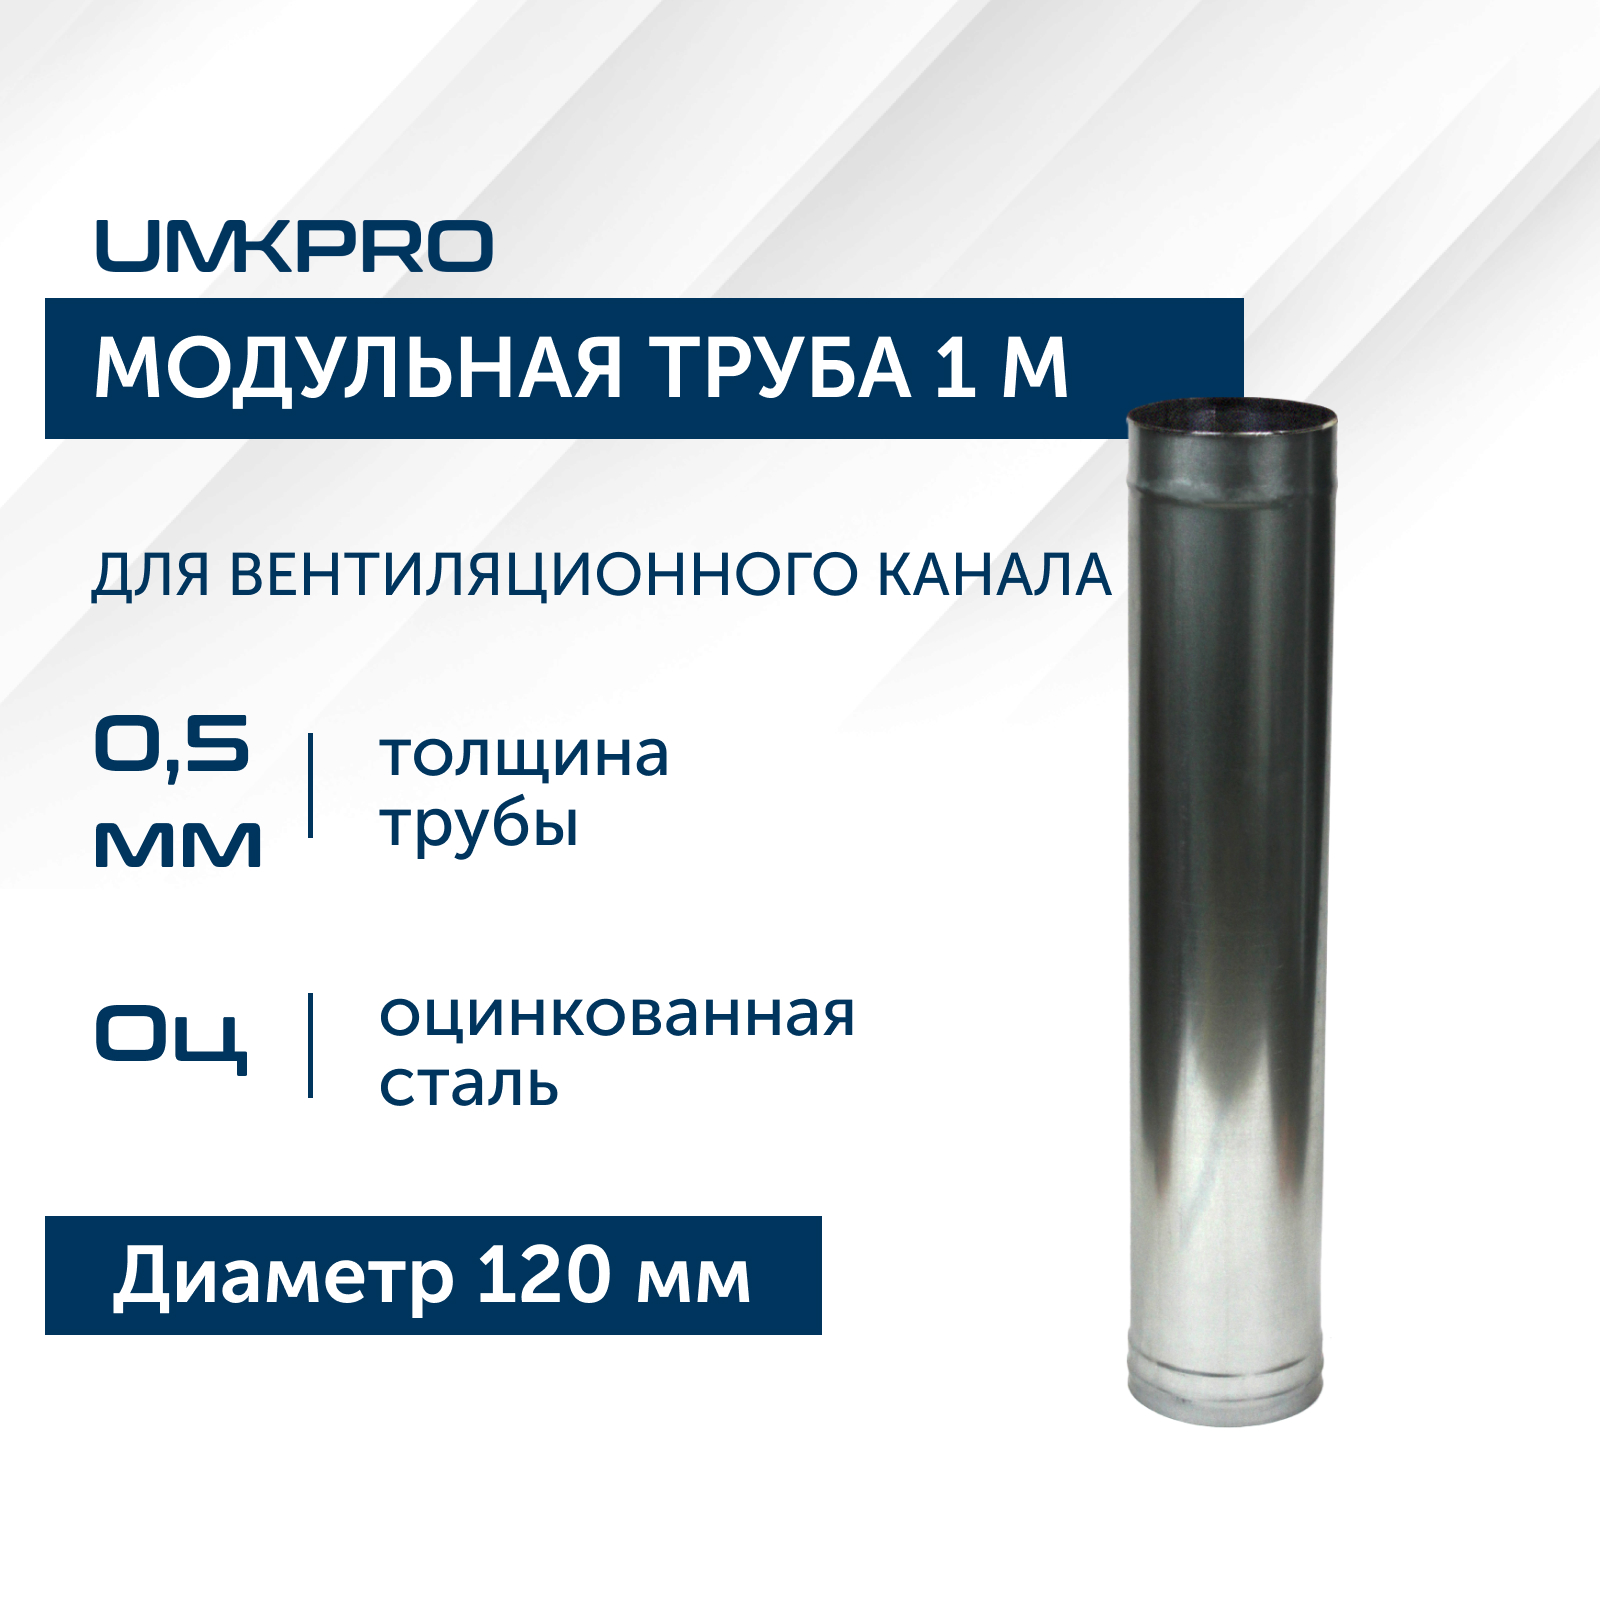 Труба модульная для дымохода 1 м UMKPRO D 120, Оц/0,5мм модульная прихожая корвет 25